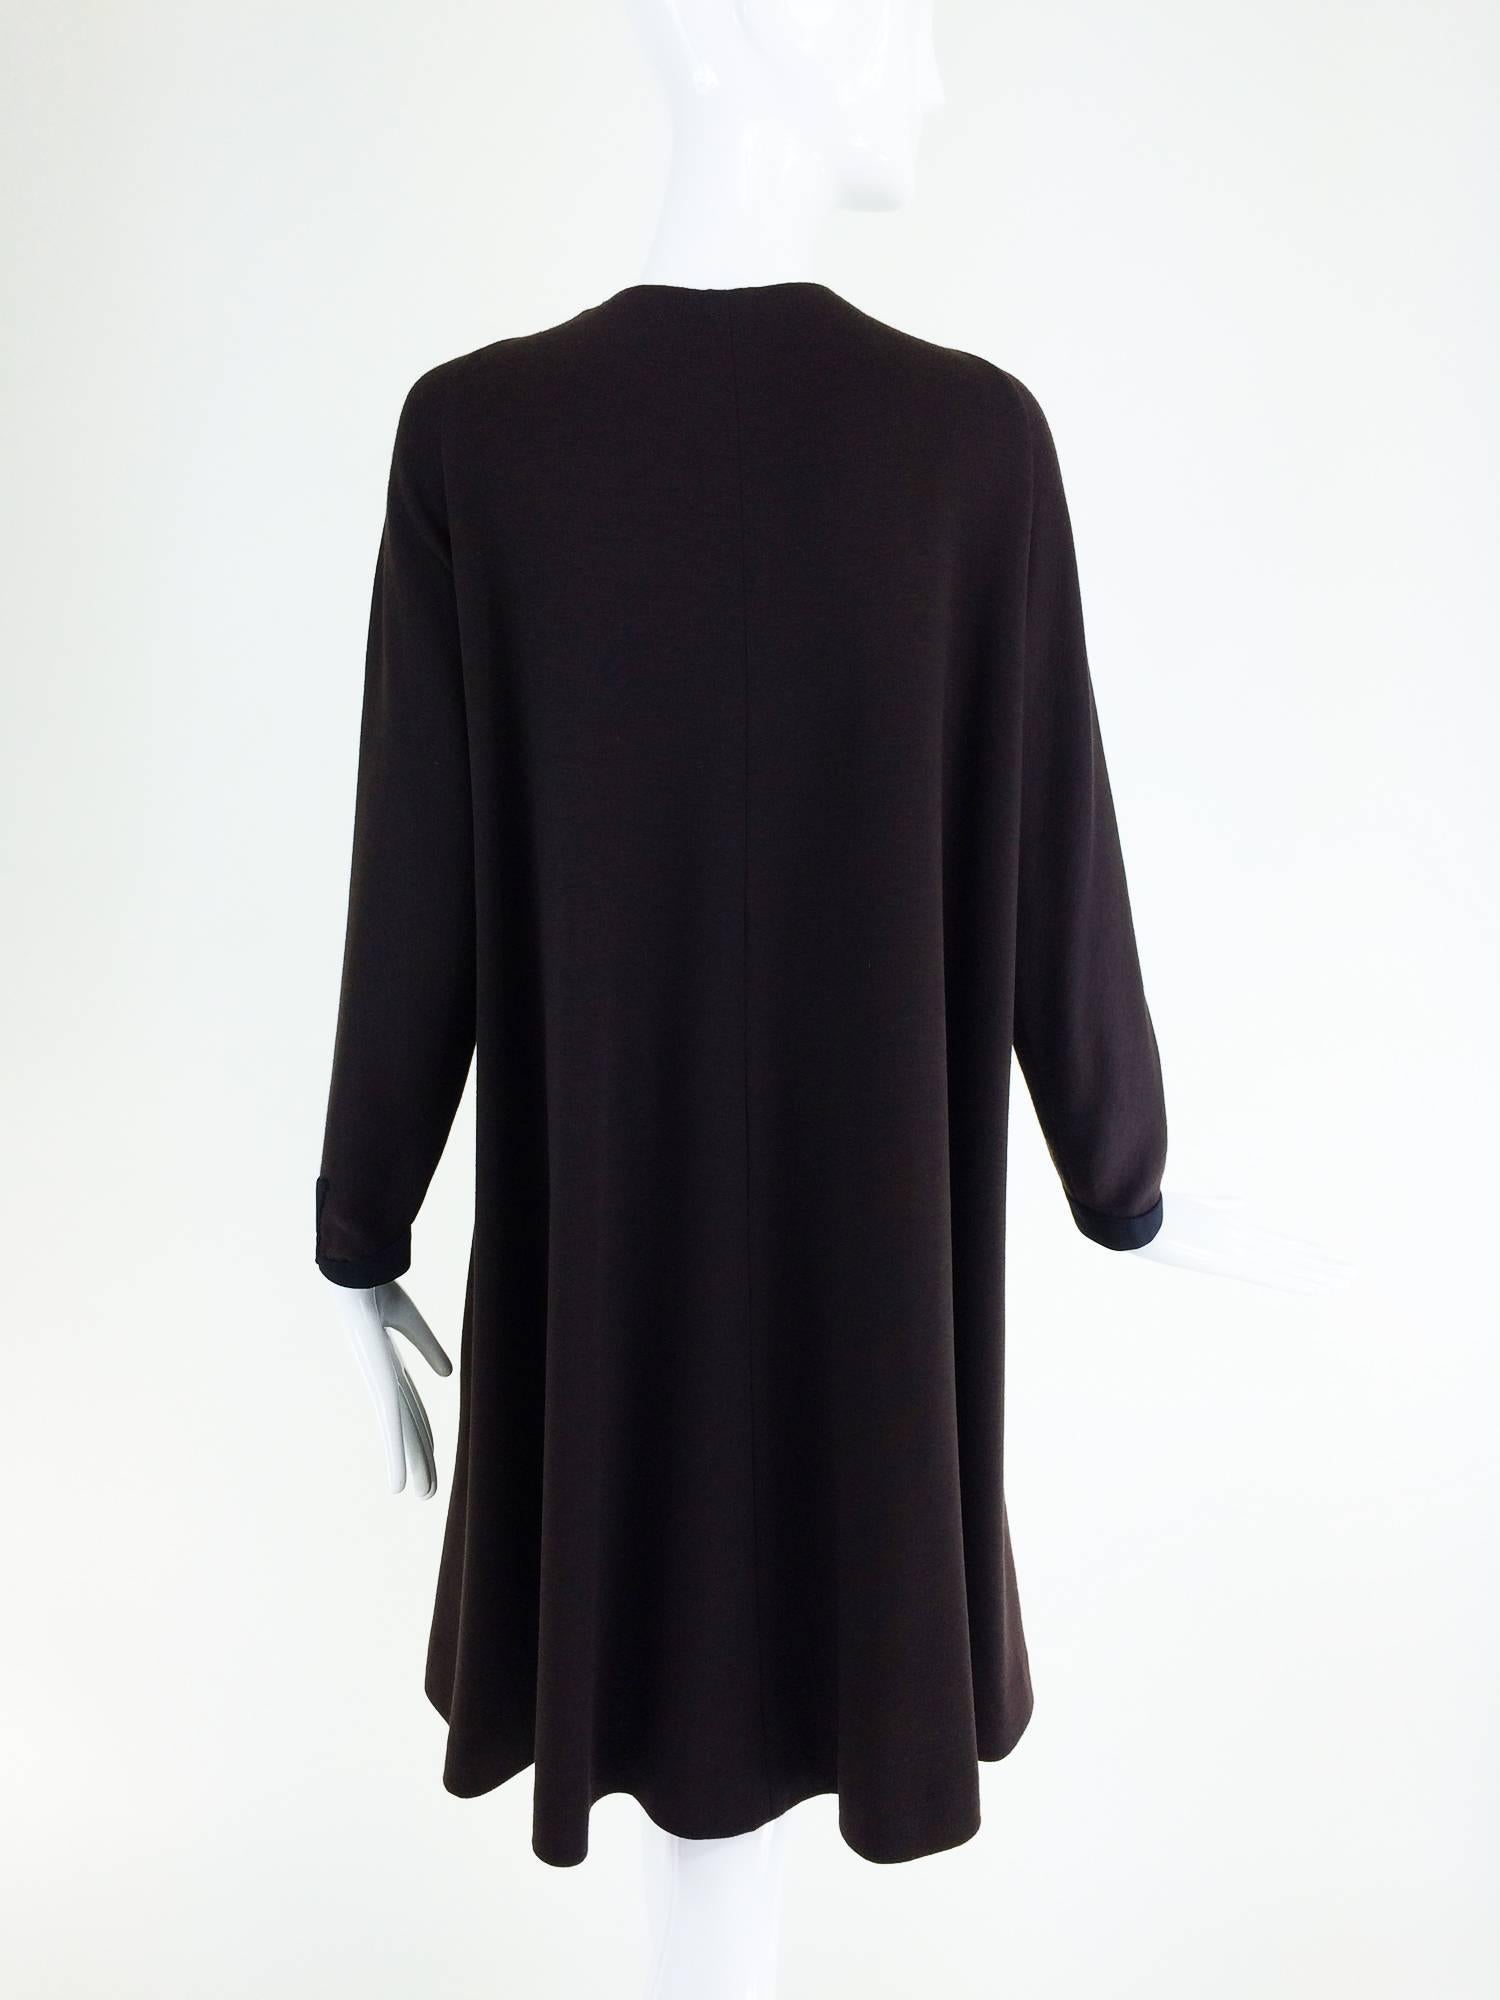 Geffrey Beene brown knit tent dress with black silk twill trims 1980s 1